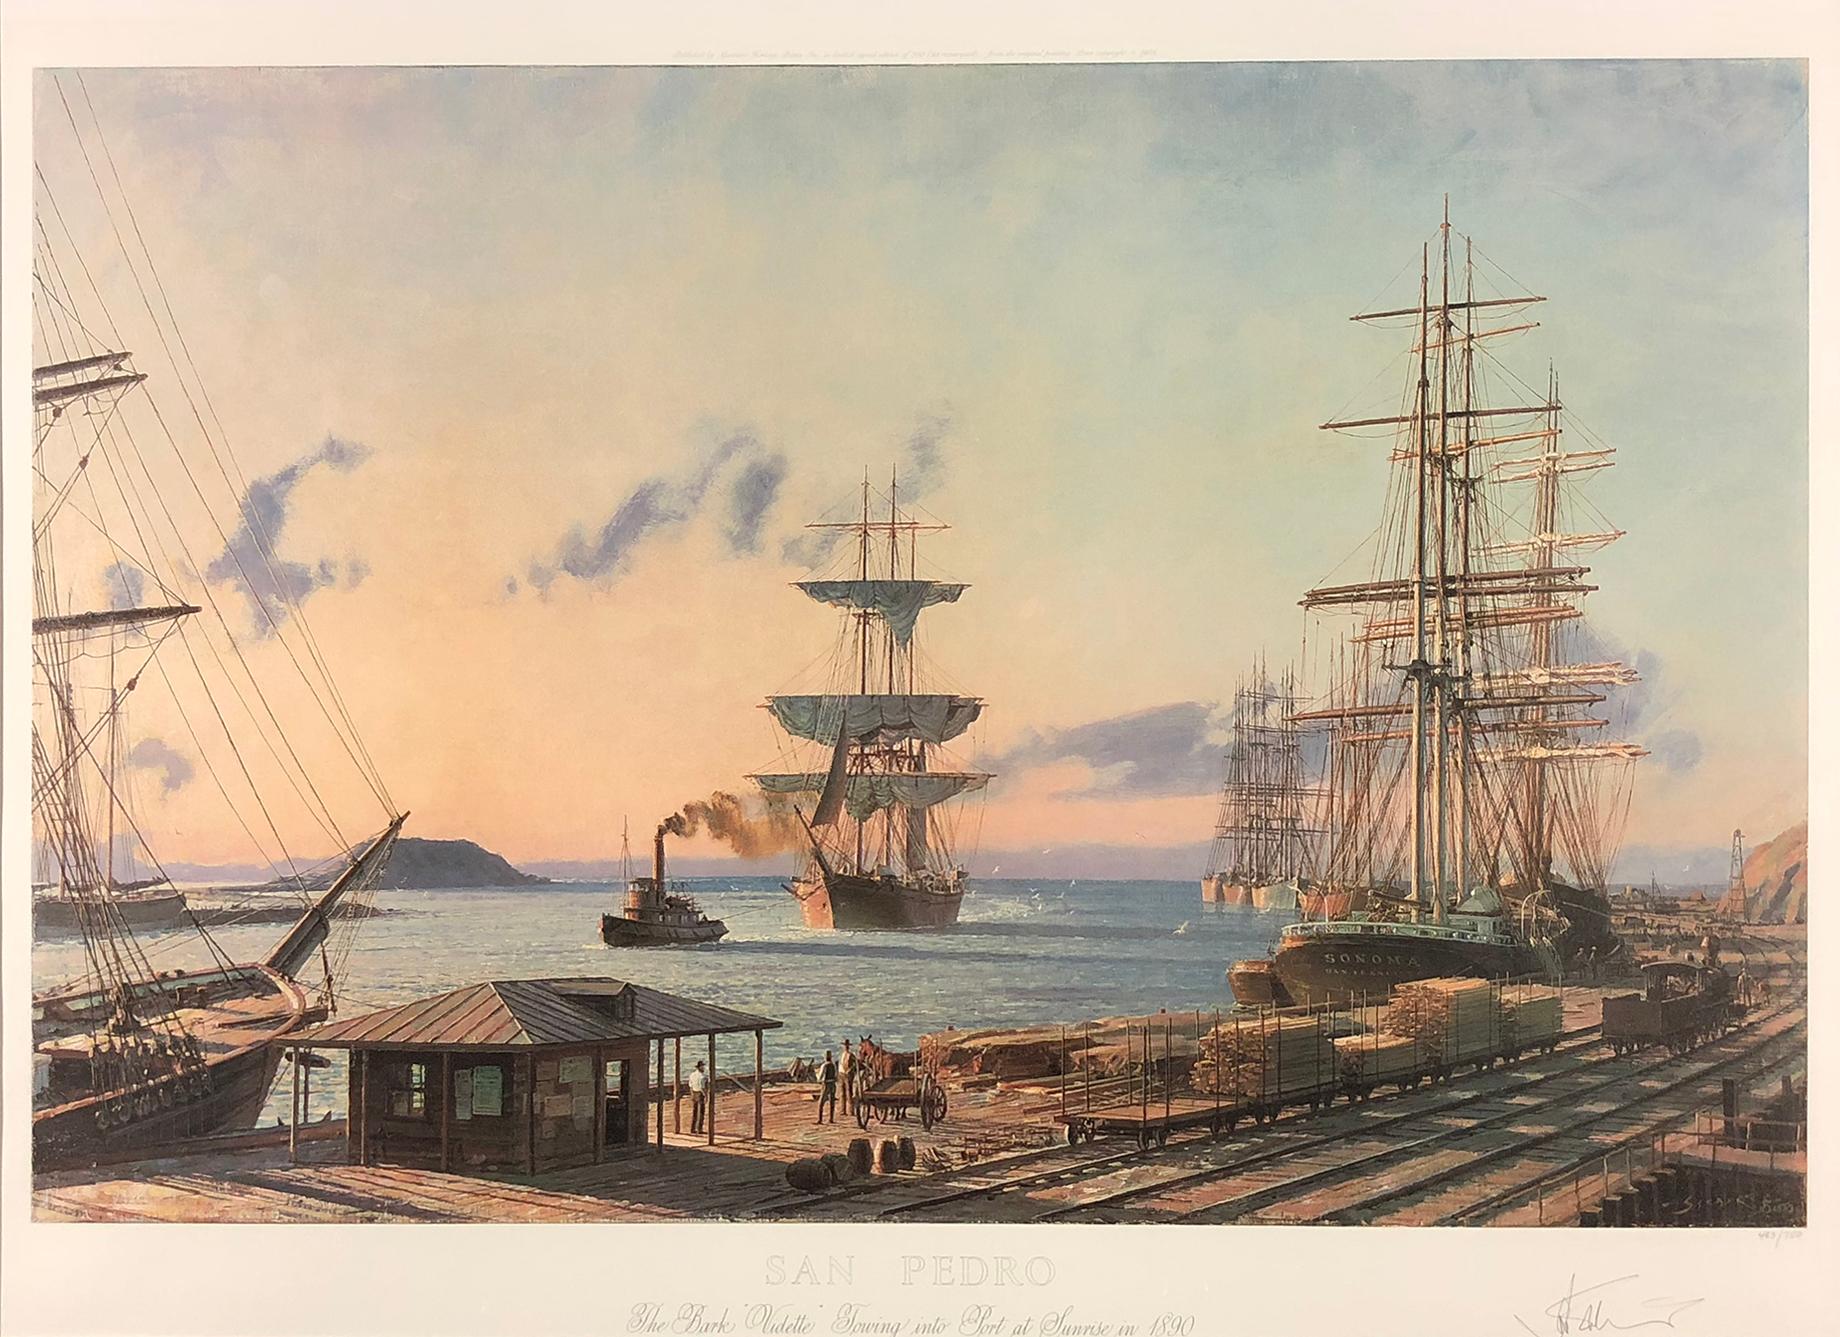 John Stobart Landscape Print - San Pedro, The Bark "Vidette" Towing into Port at Sunrise, 1890